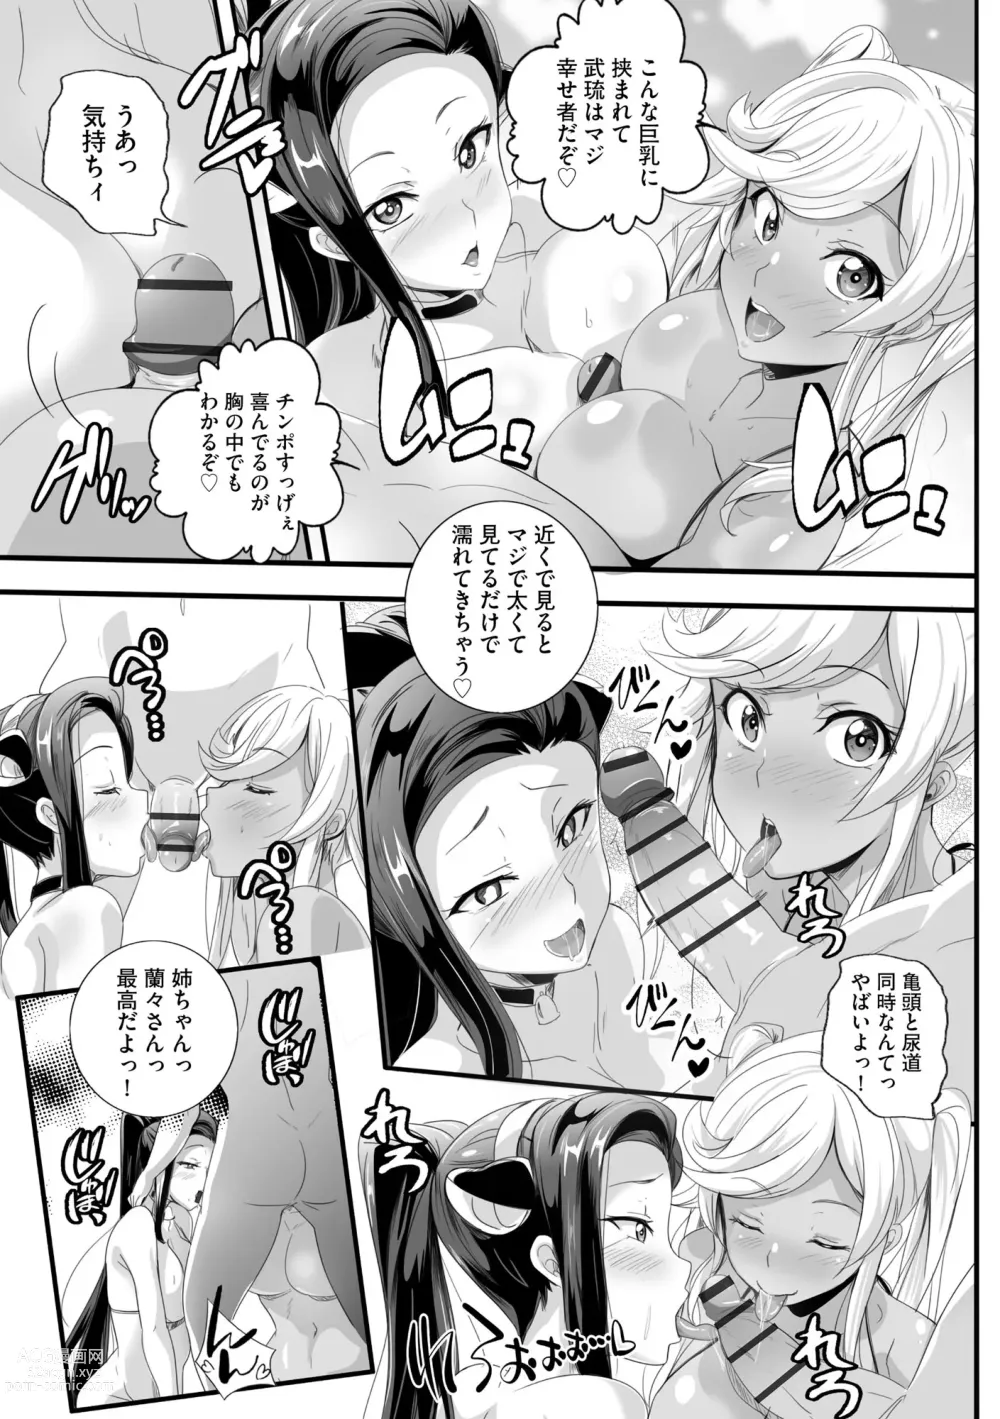 Page 25 of manga Cyberia Plus Vol. 13